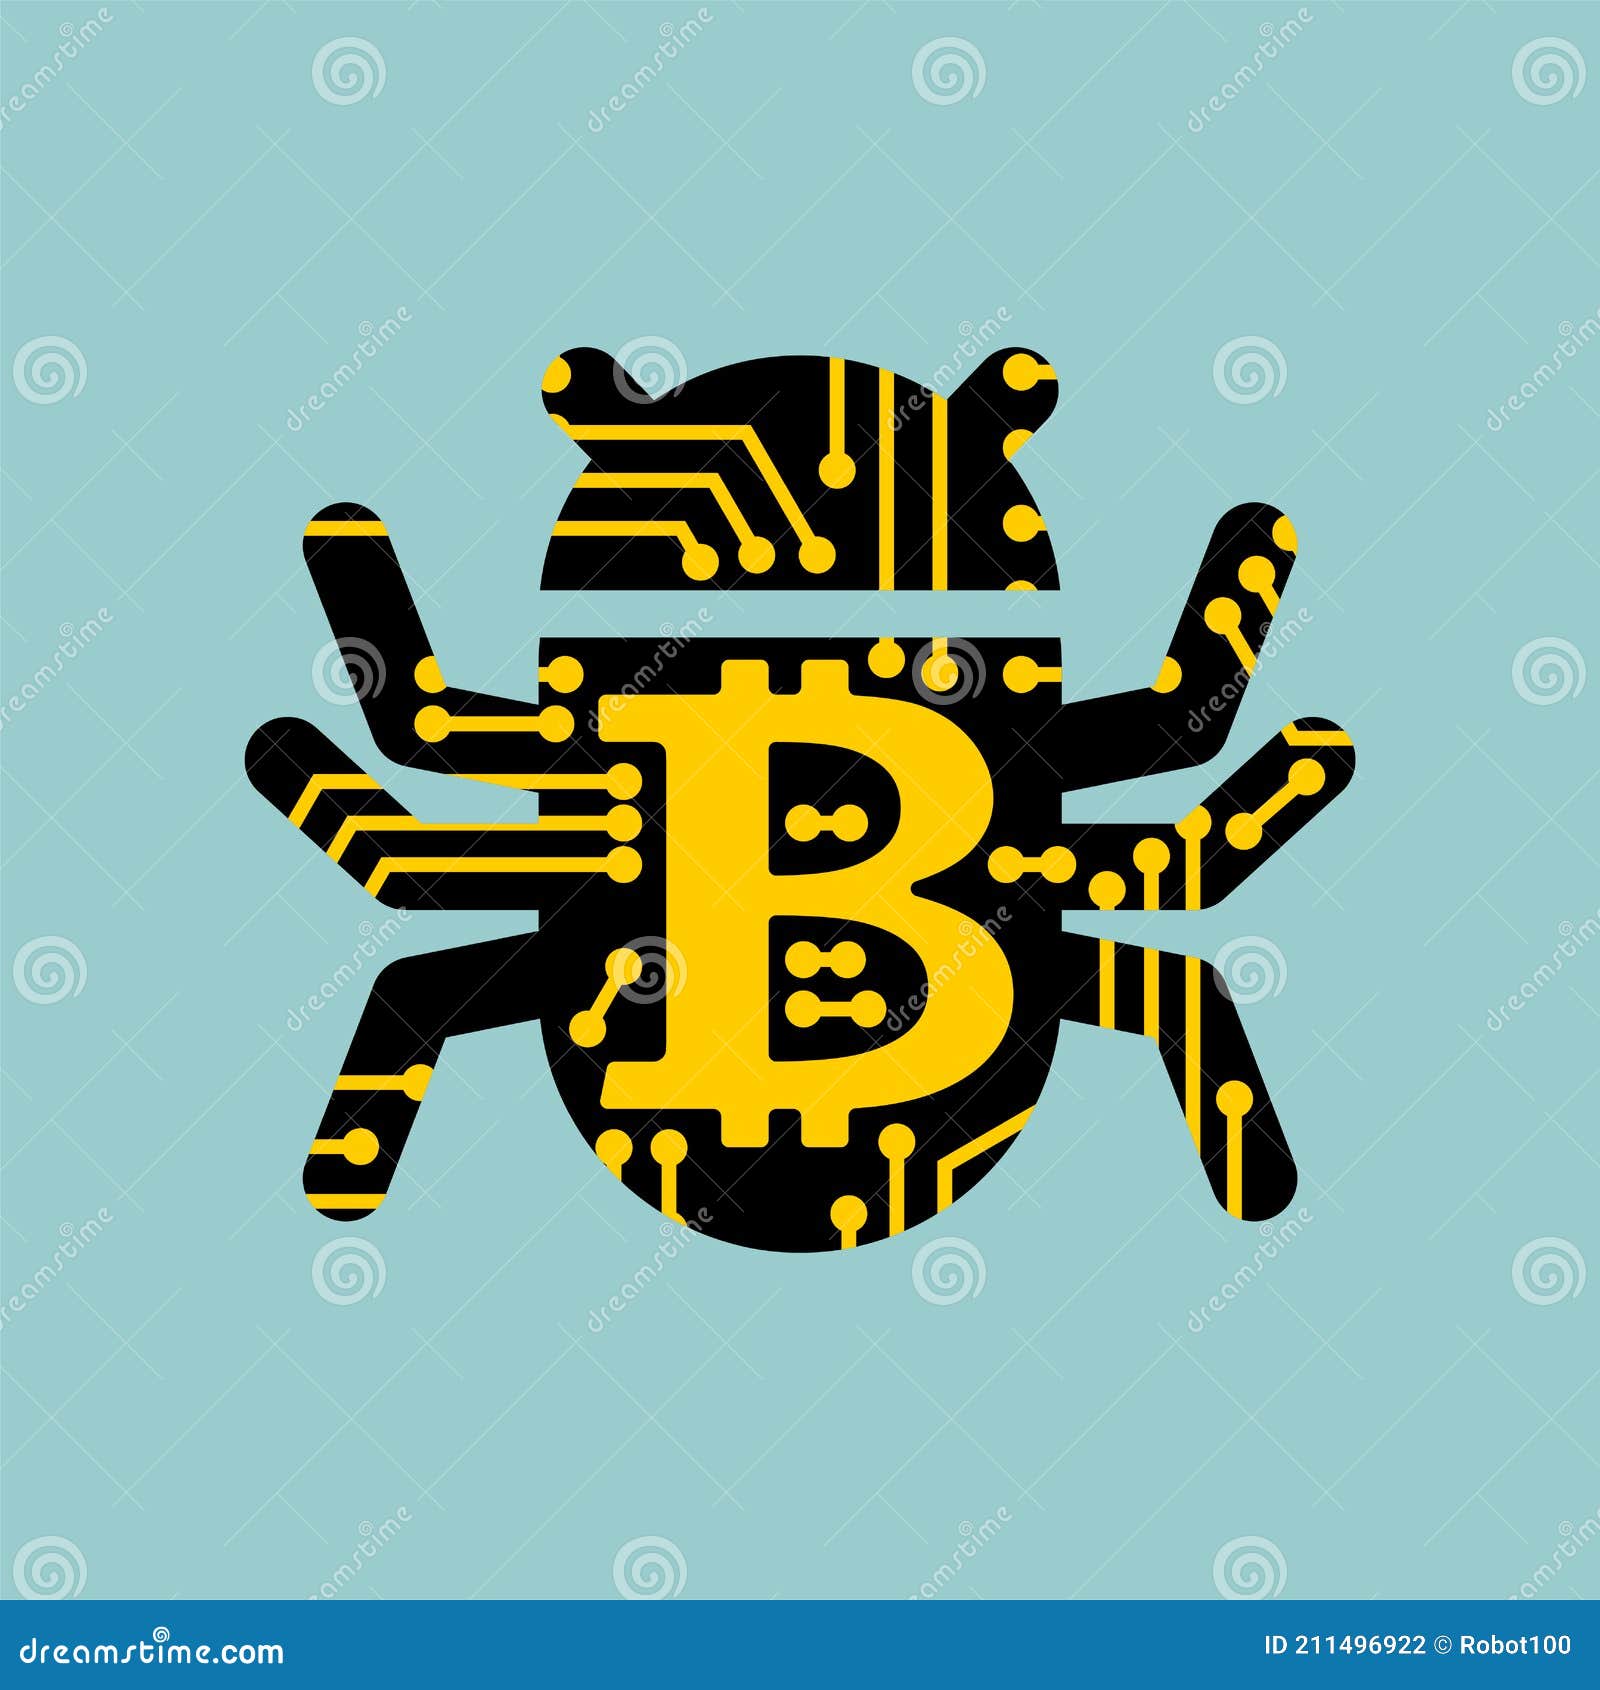 Bitcoin bug bitcoins buy instantly